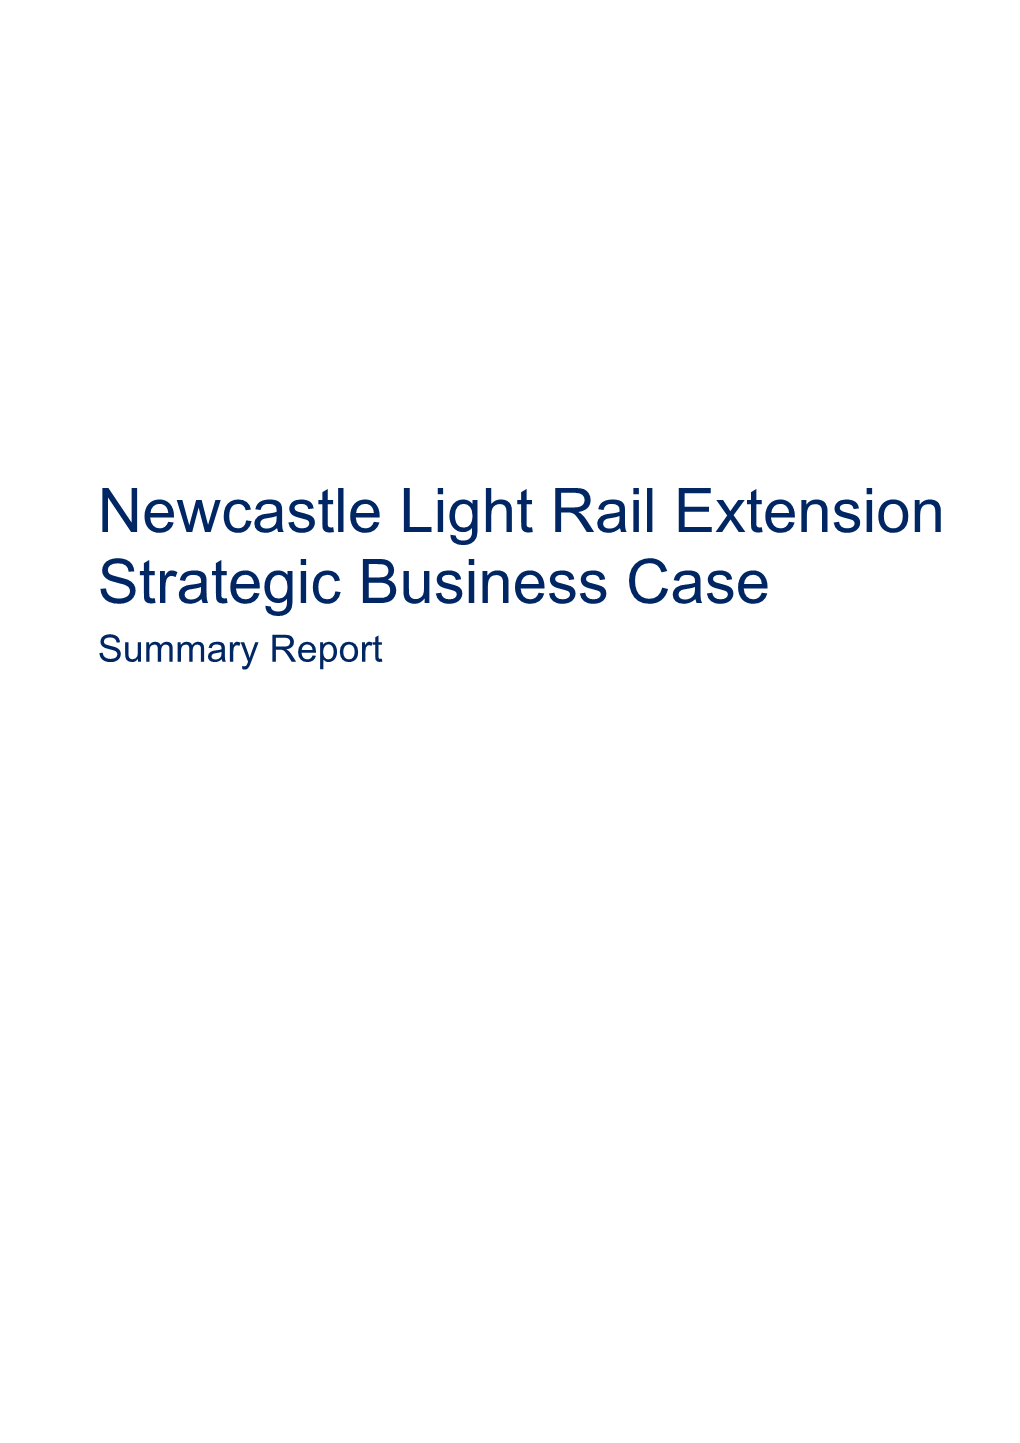 Newcastle Light Rail Extension Business Case Summary